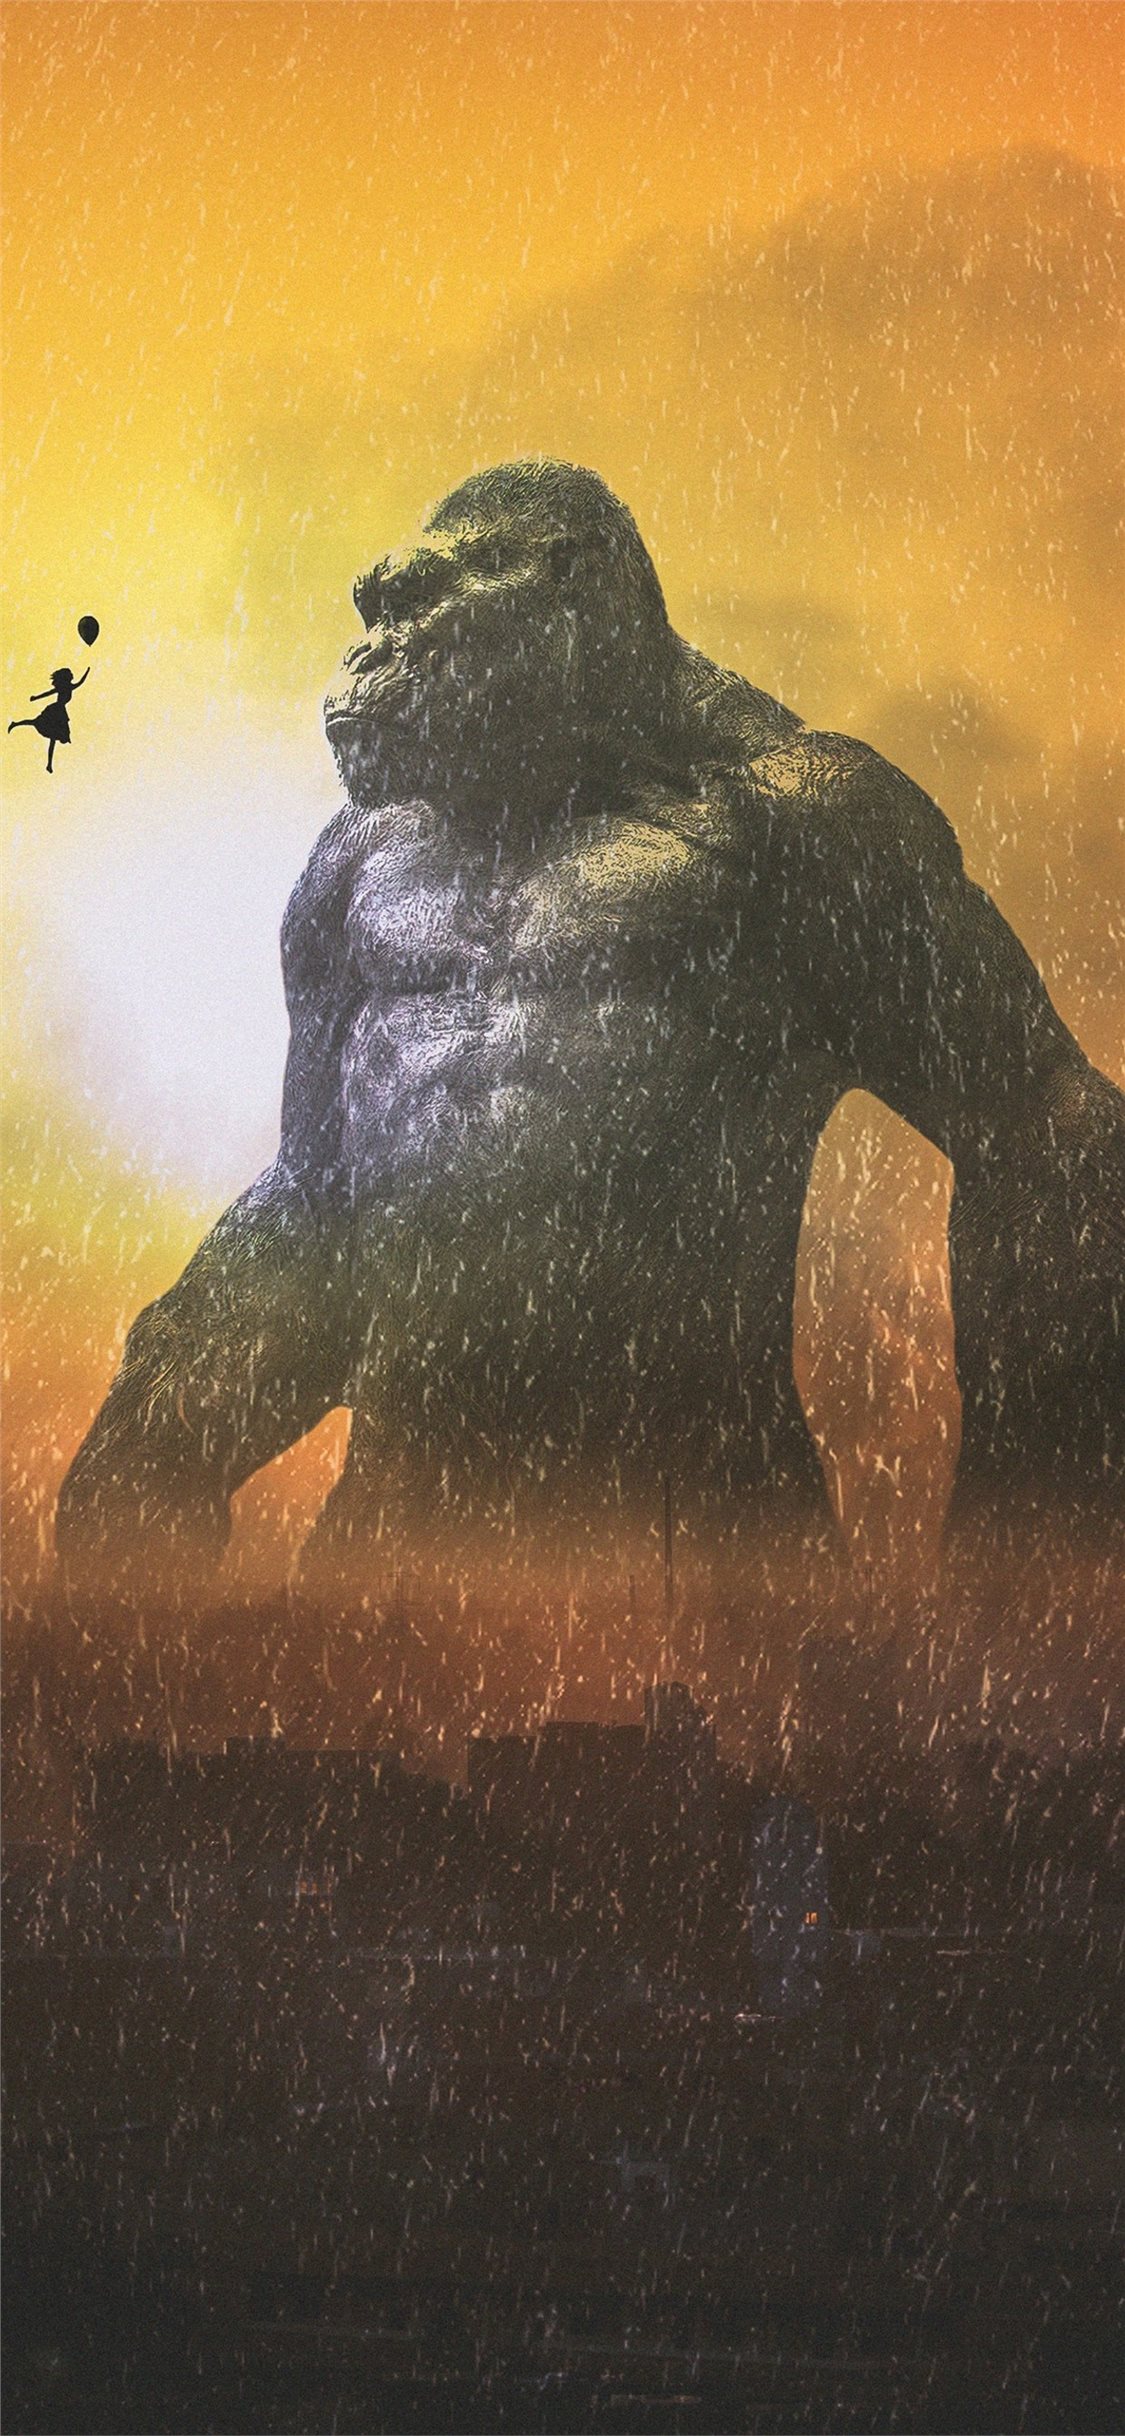 King Kong Wallpaper 4k - HD Wallpaper 